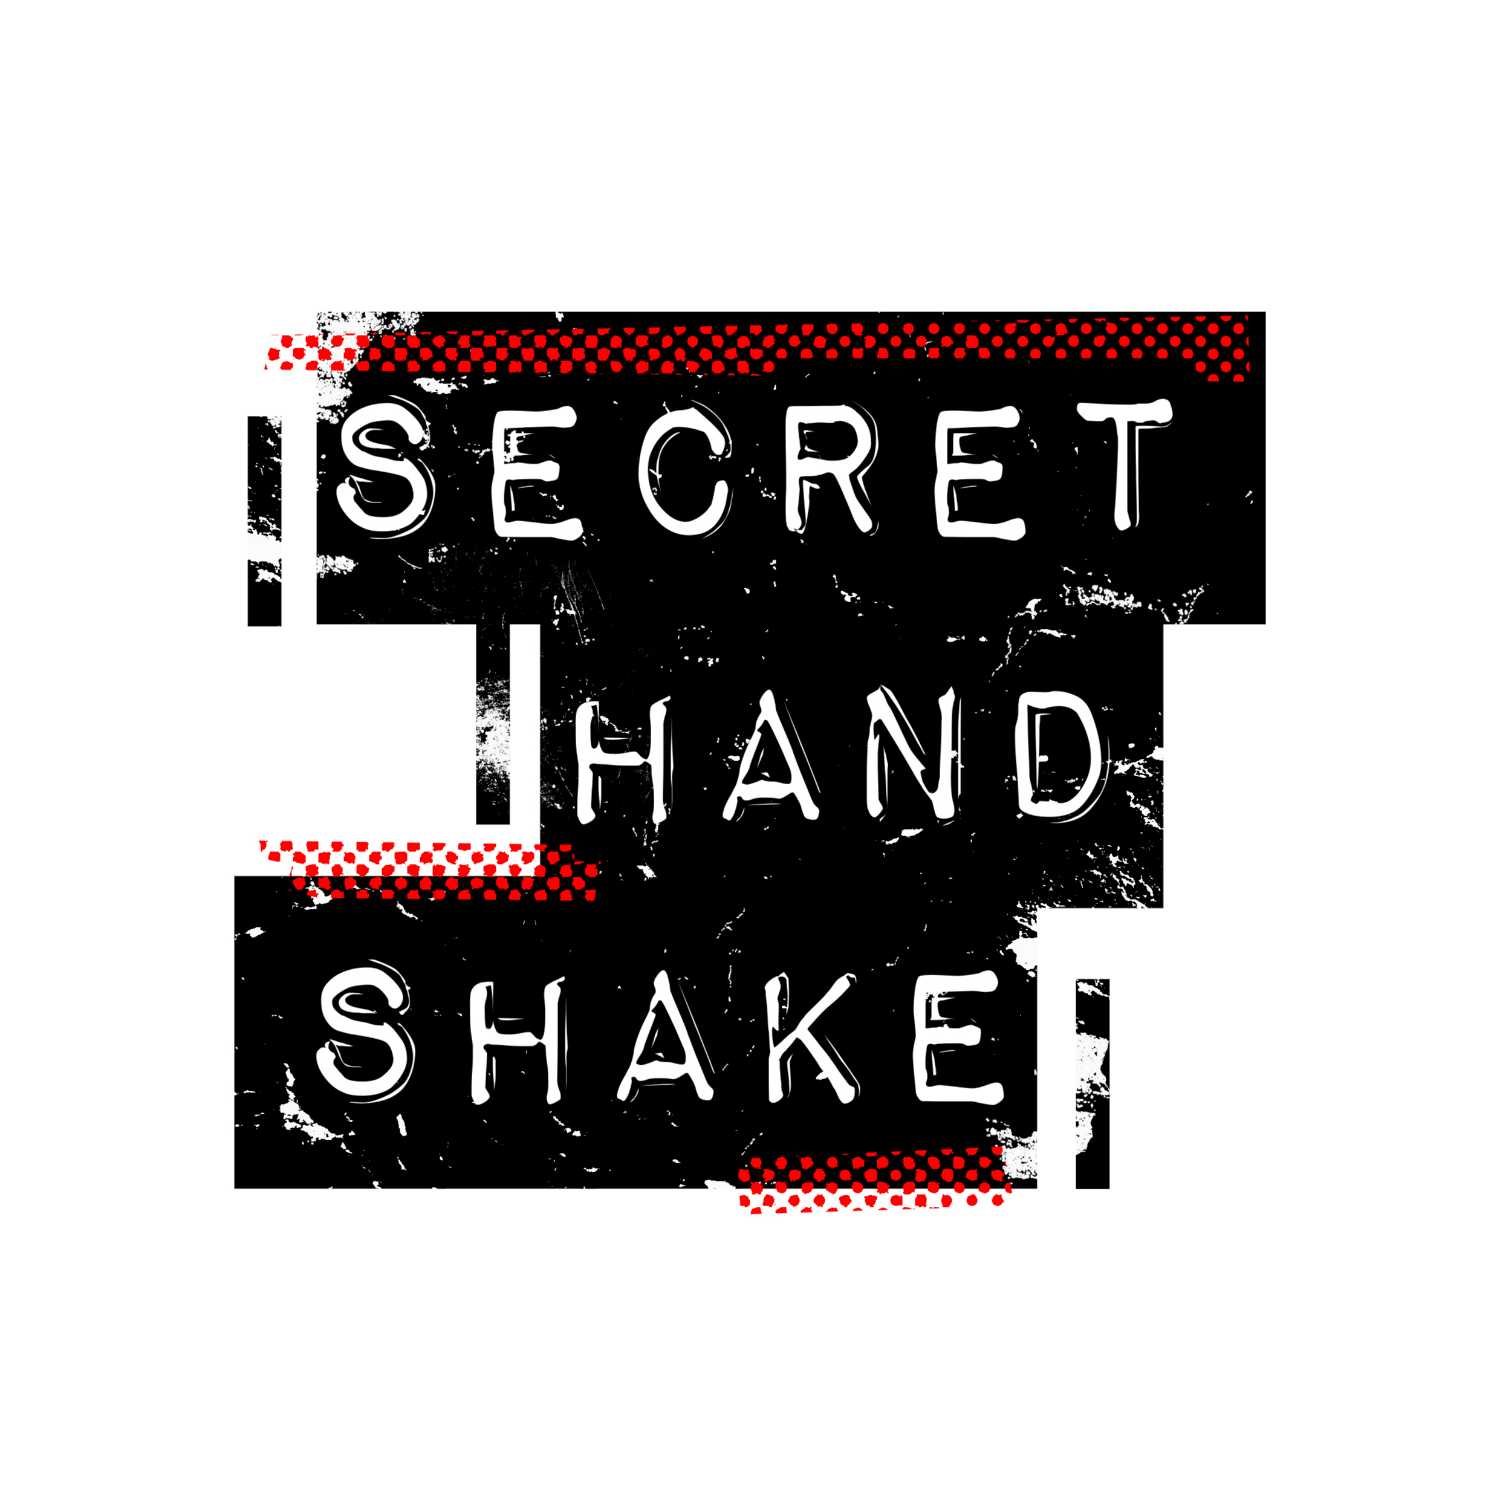 Secret Handshake